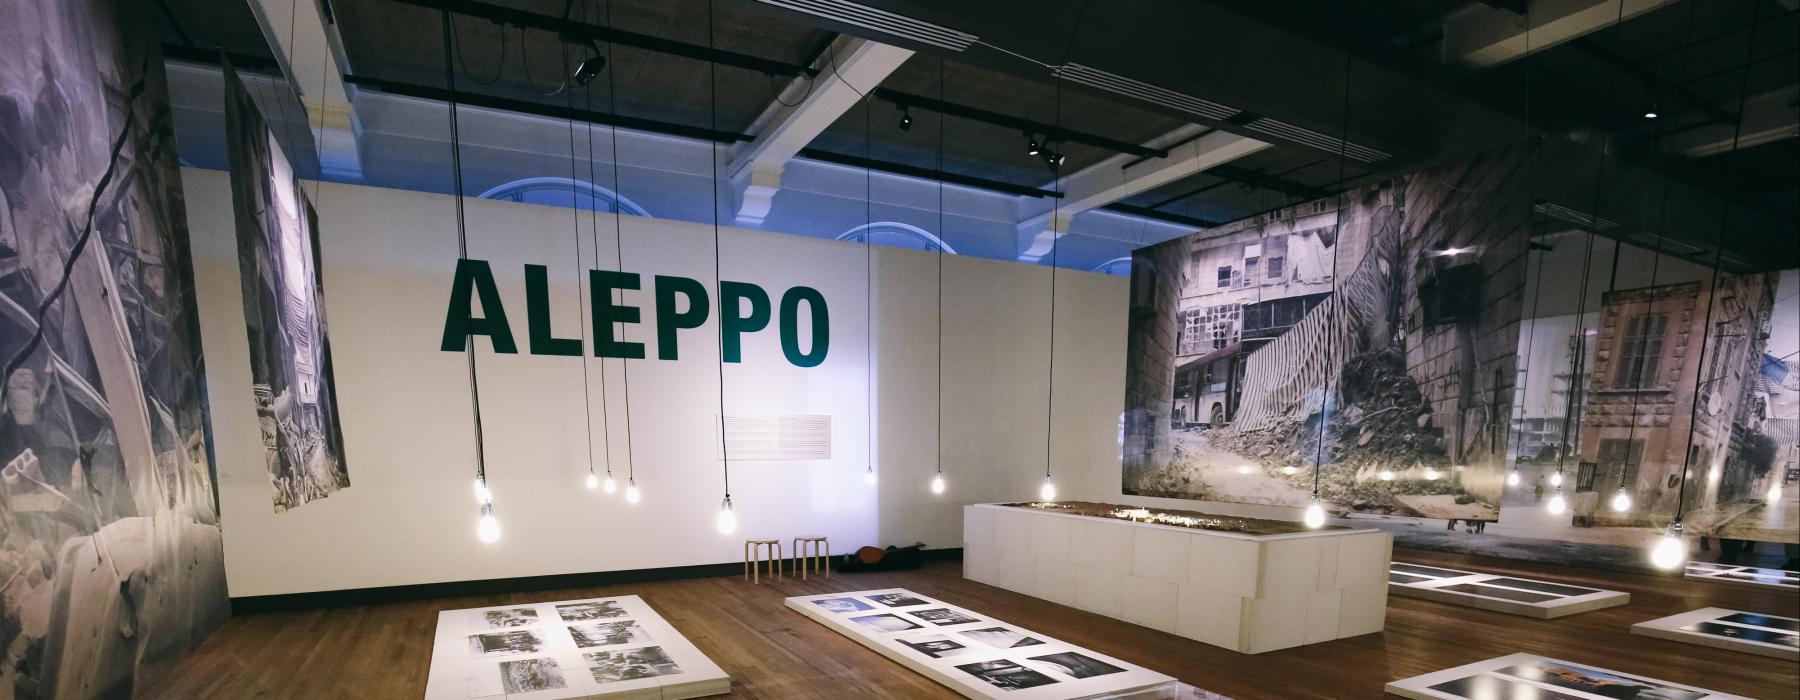 Tropenmuseum, tentoonstelling, Aleppo